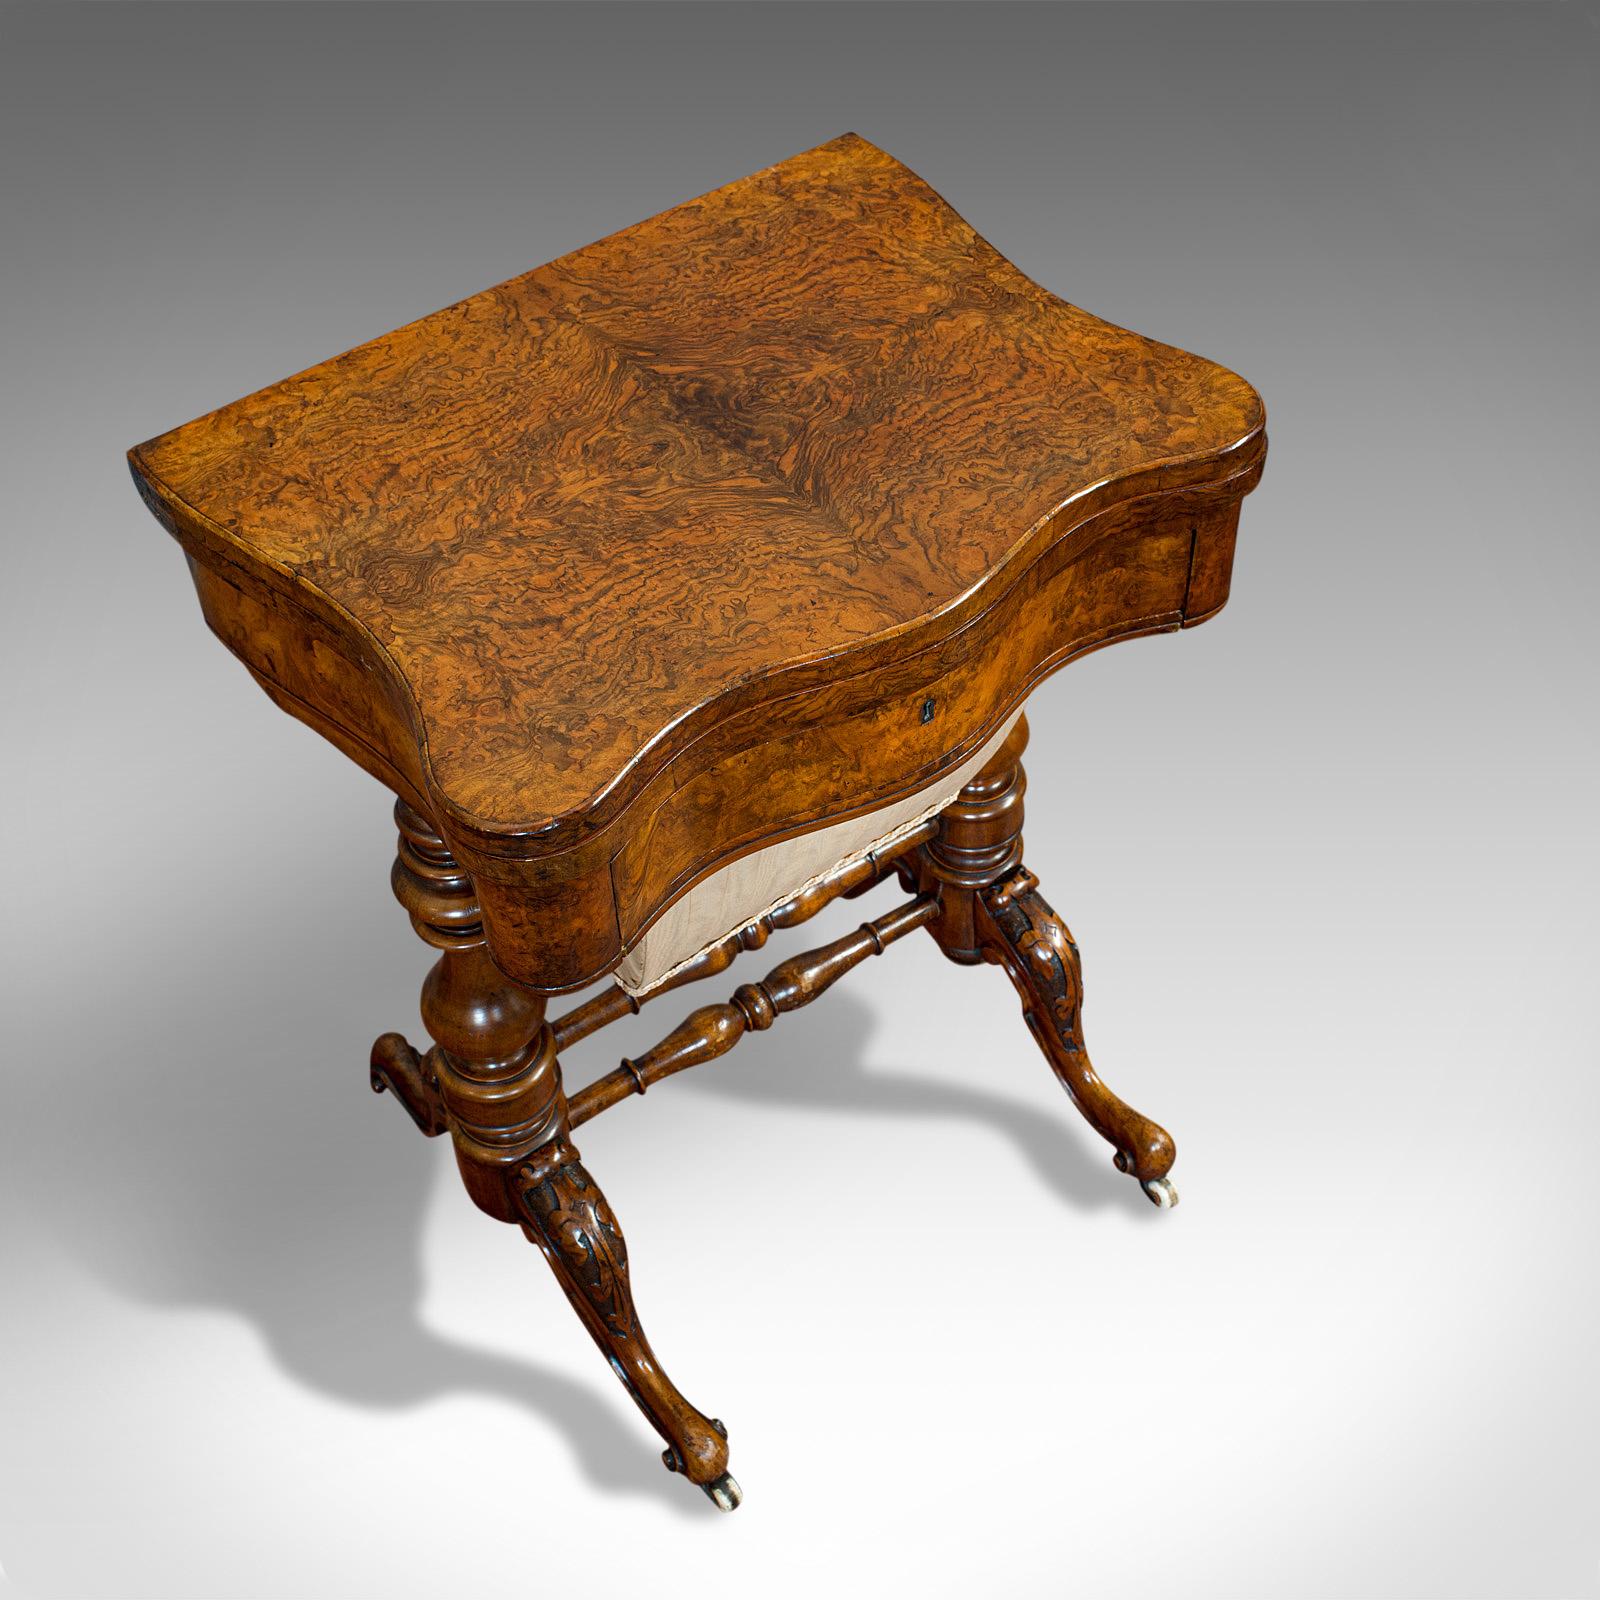 Mid-19th Century Antique Games Table, English, Walnut, Burr, Chess, Backgammon, Victorian